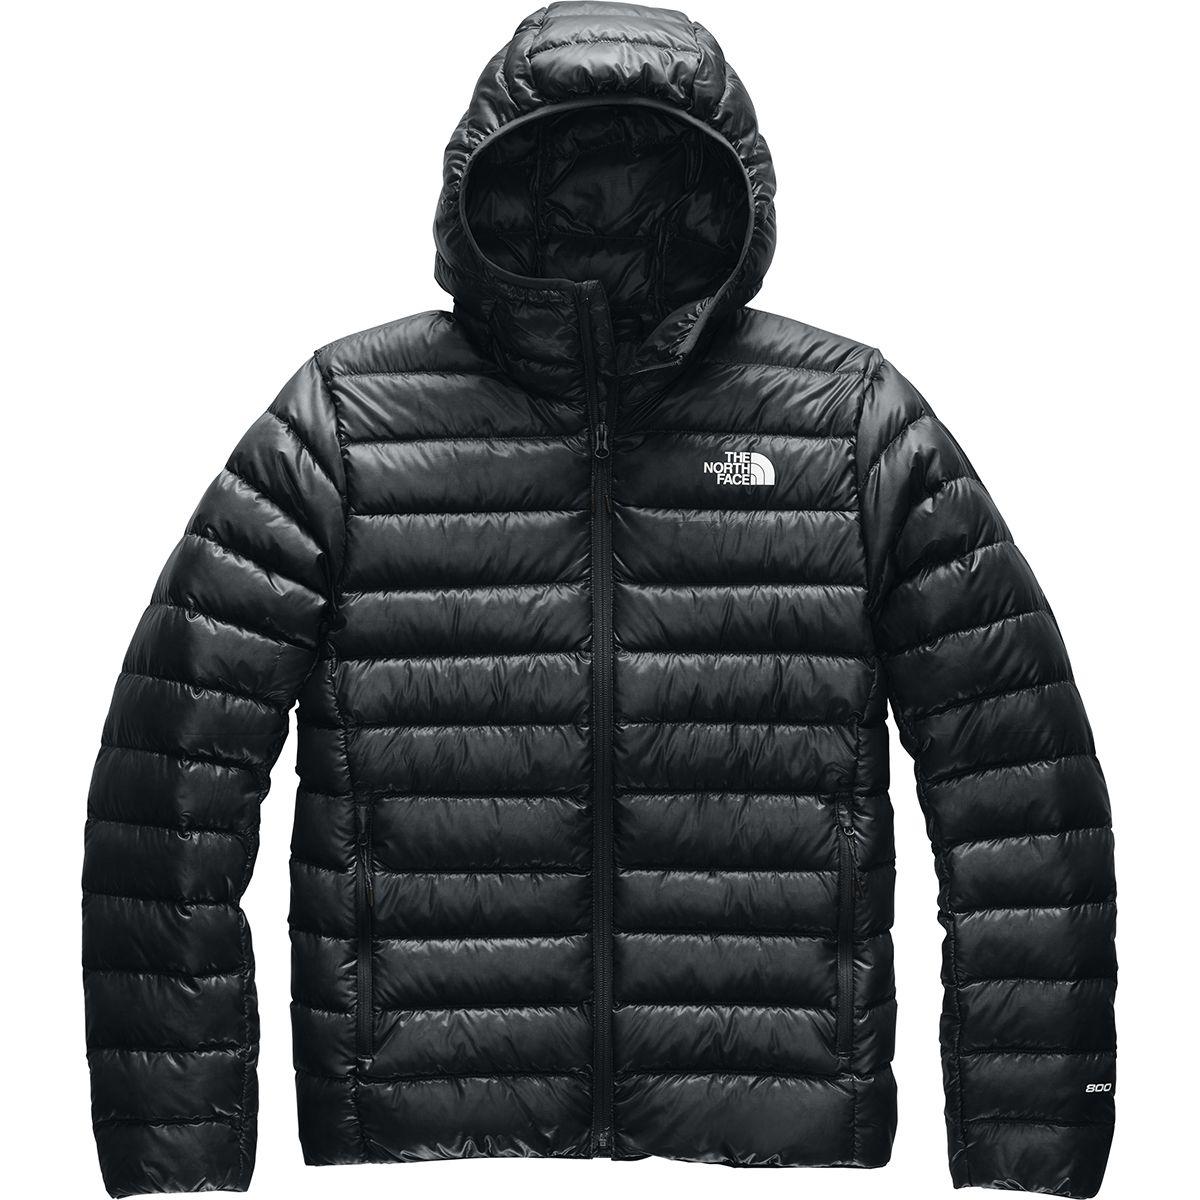 The North Face Goose Sierra Peak Down Hooded Jacket in Black for Men - Lyst